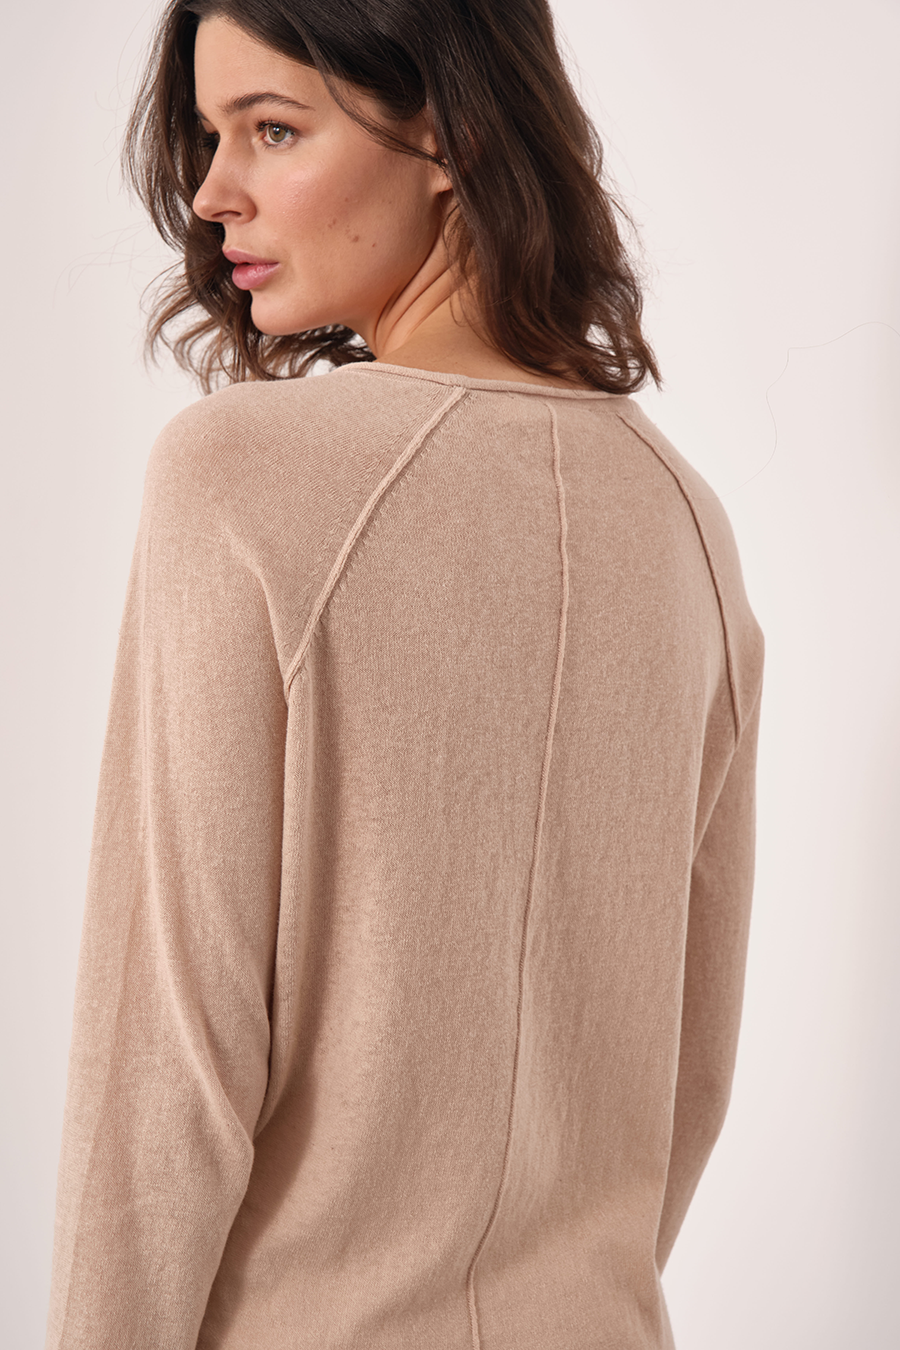 Raglan Sleeve Lightweight Unisex Sweater in Cotton/Linen Blend